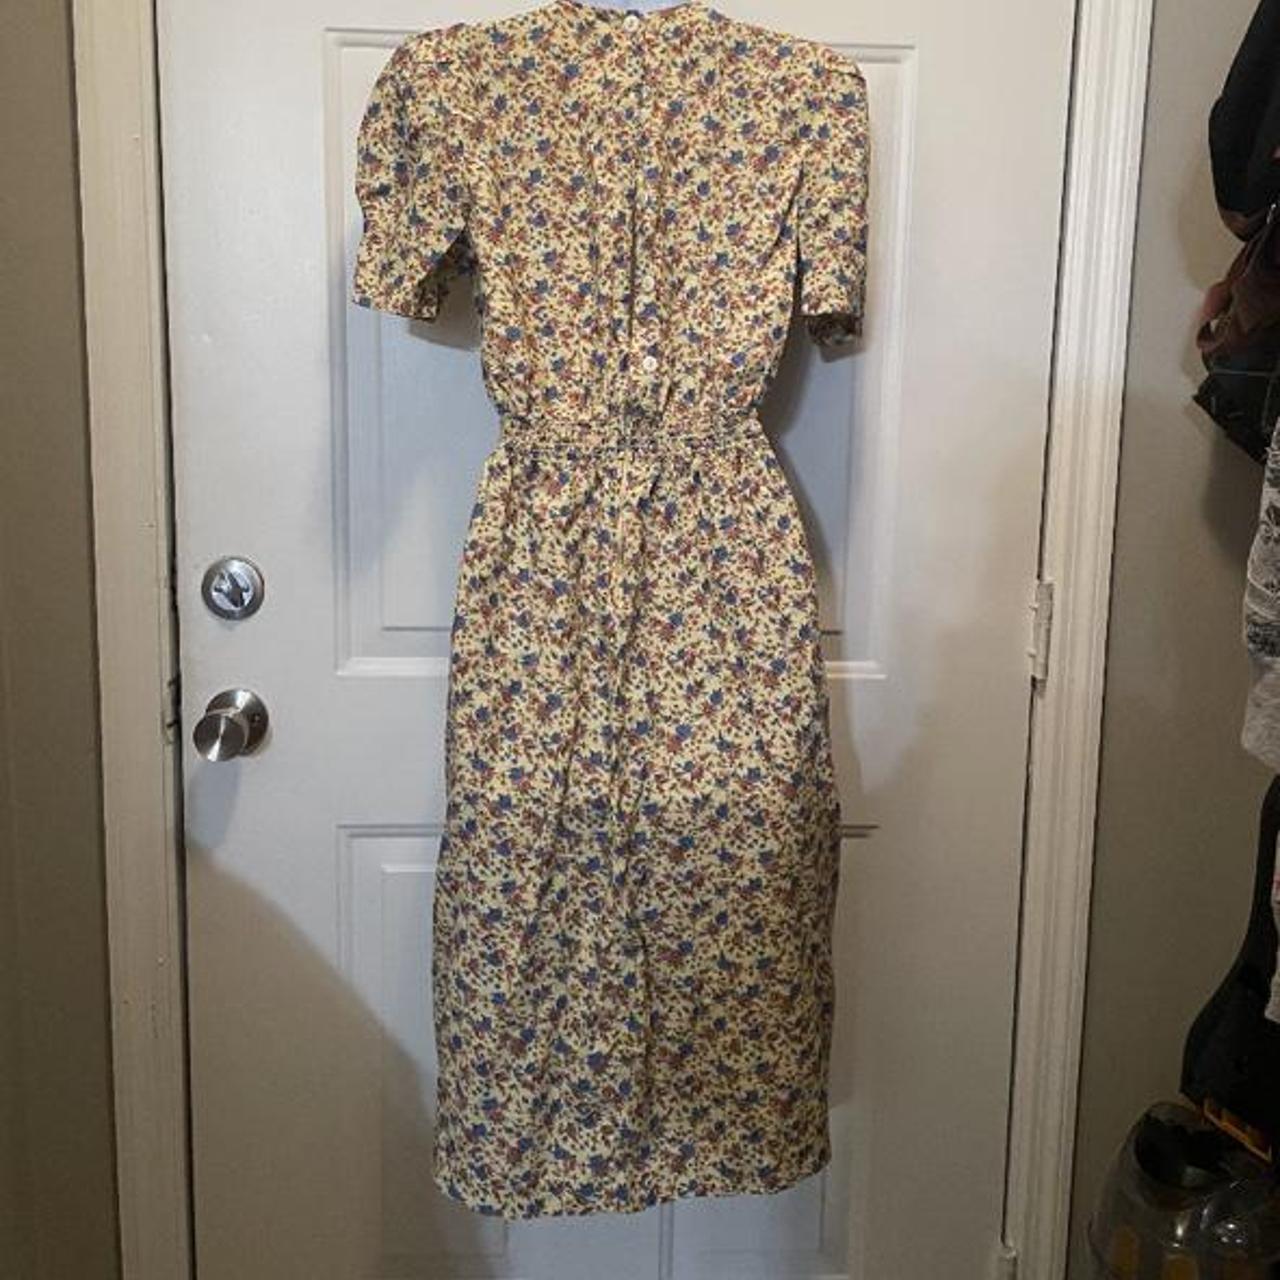 Product Image 2 - - Miss Dorby cottagecore dress!

#cottagecore